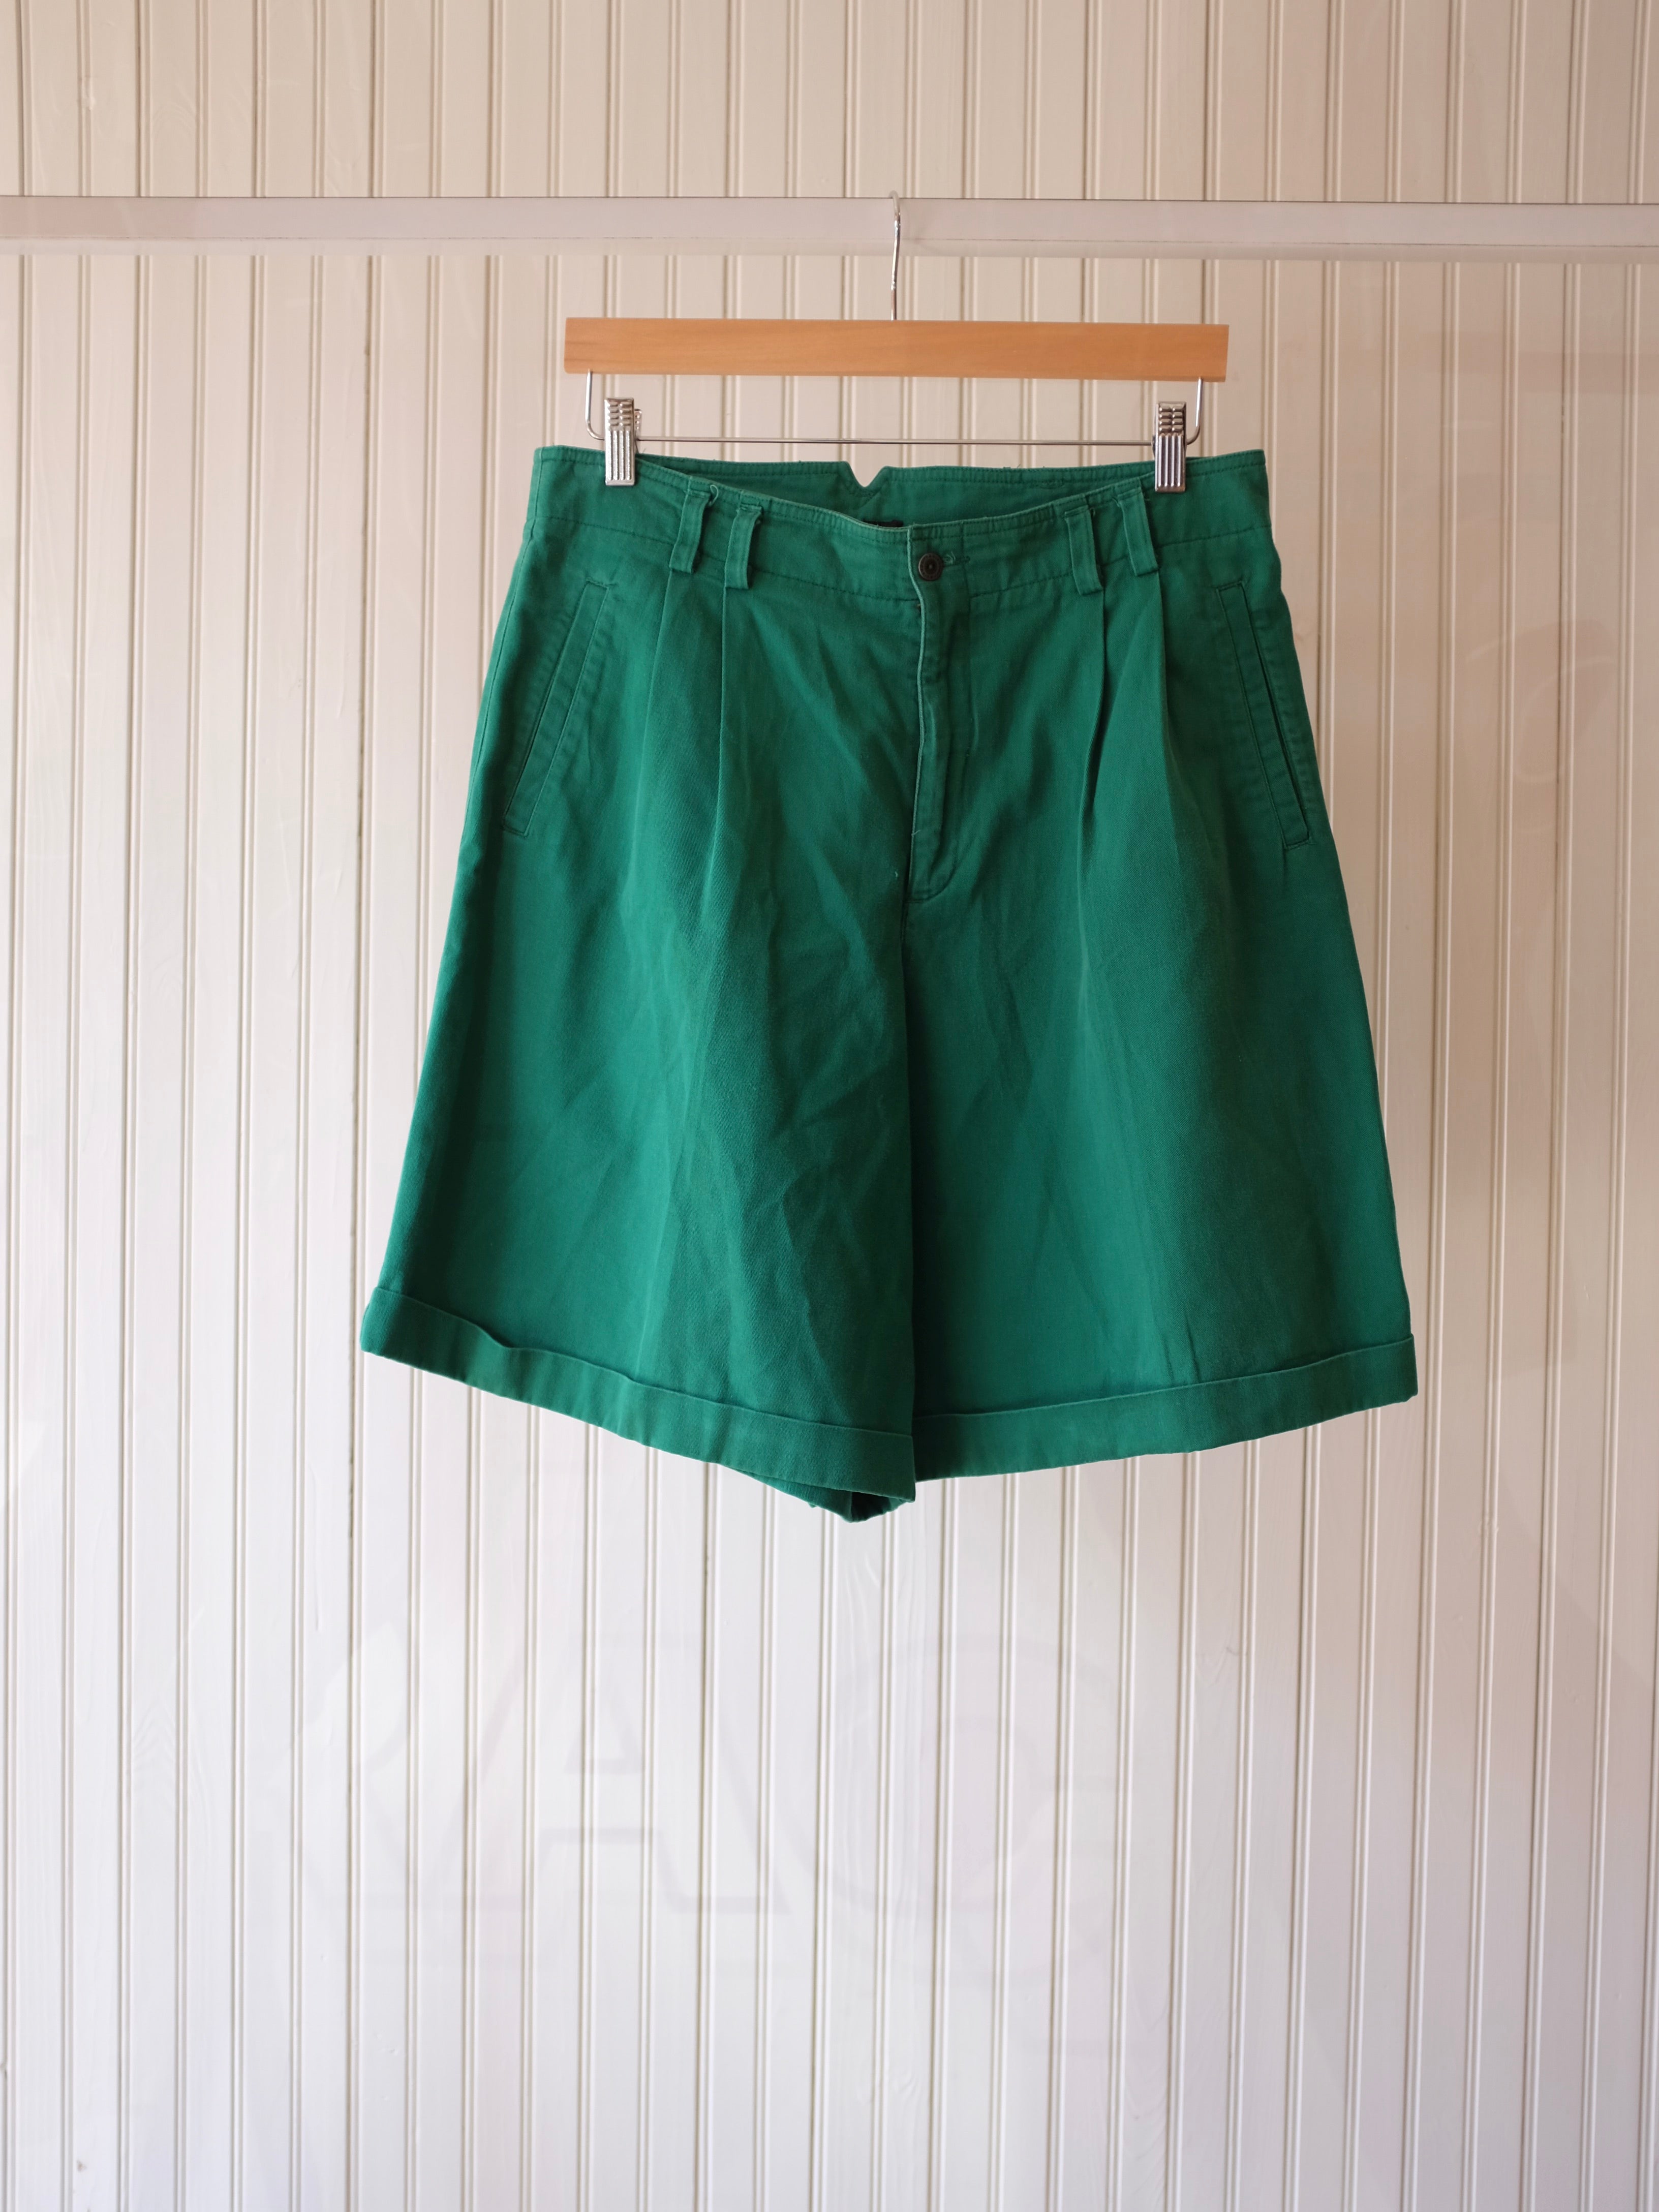 Liz Sport Short Pleated Green - Vintage